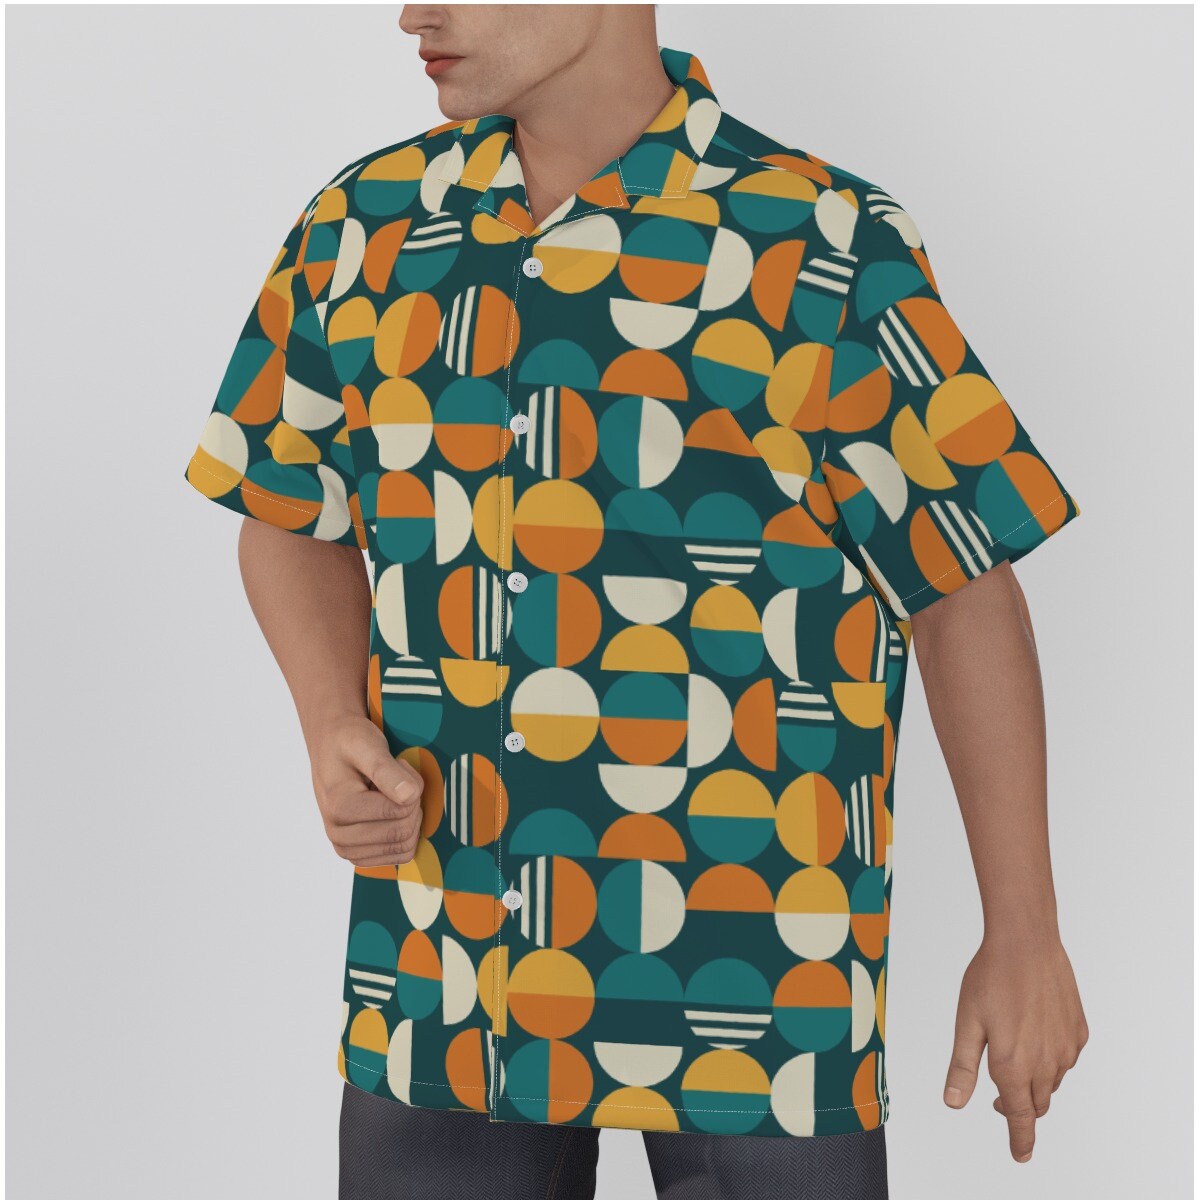 Retro Shirt Men, Retro Top, Mod Shirt, Geometric Shirt, Orange Teal Shirt, Vintage Style Top, 60s Inspired Hawaiian Shirt, Dress Shirt